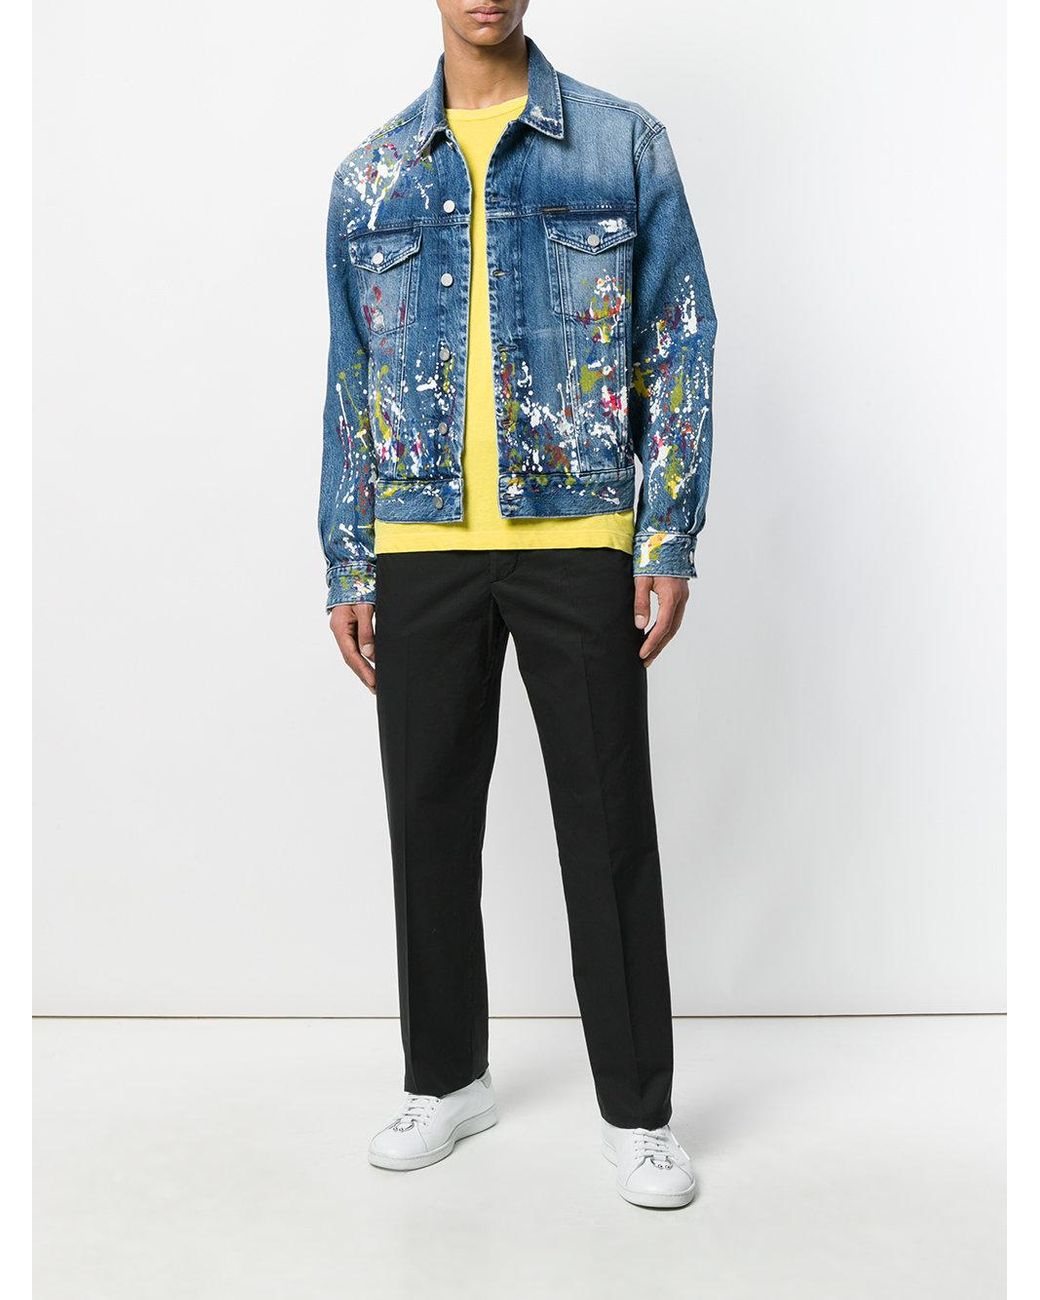 Calvin Klein Paint Splatter Jacket Sale Discounts, Save 69% | jlcatj.gob.mx